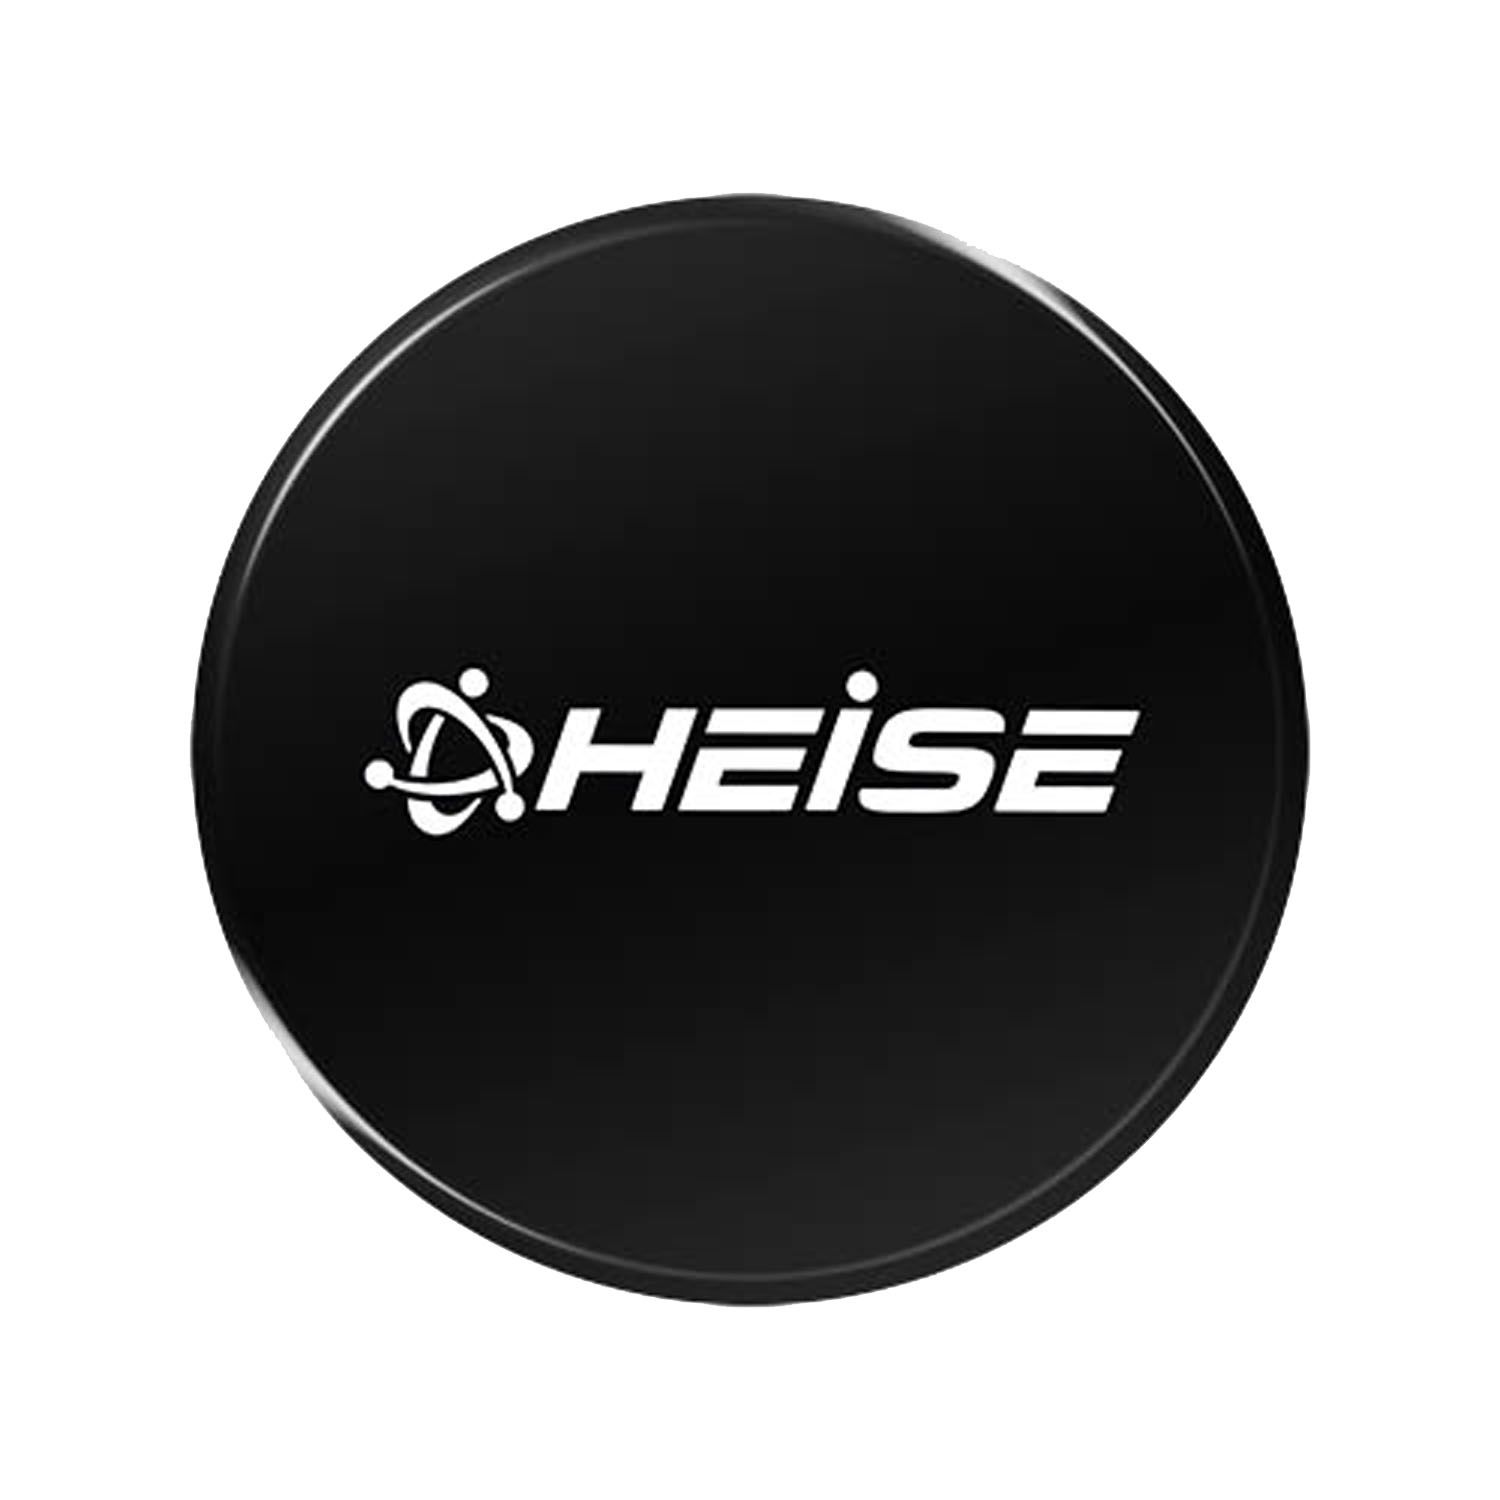 HEISE - 9" SINGLE POLYCARBONATE REPLACEMENT LENS COVER FOR MODELS HEDL5 & HEDL7 LIGHTS (BLACK)